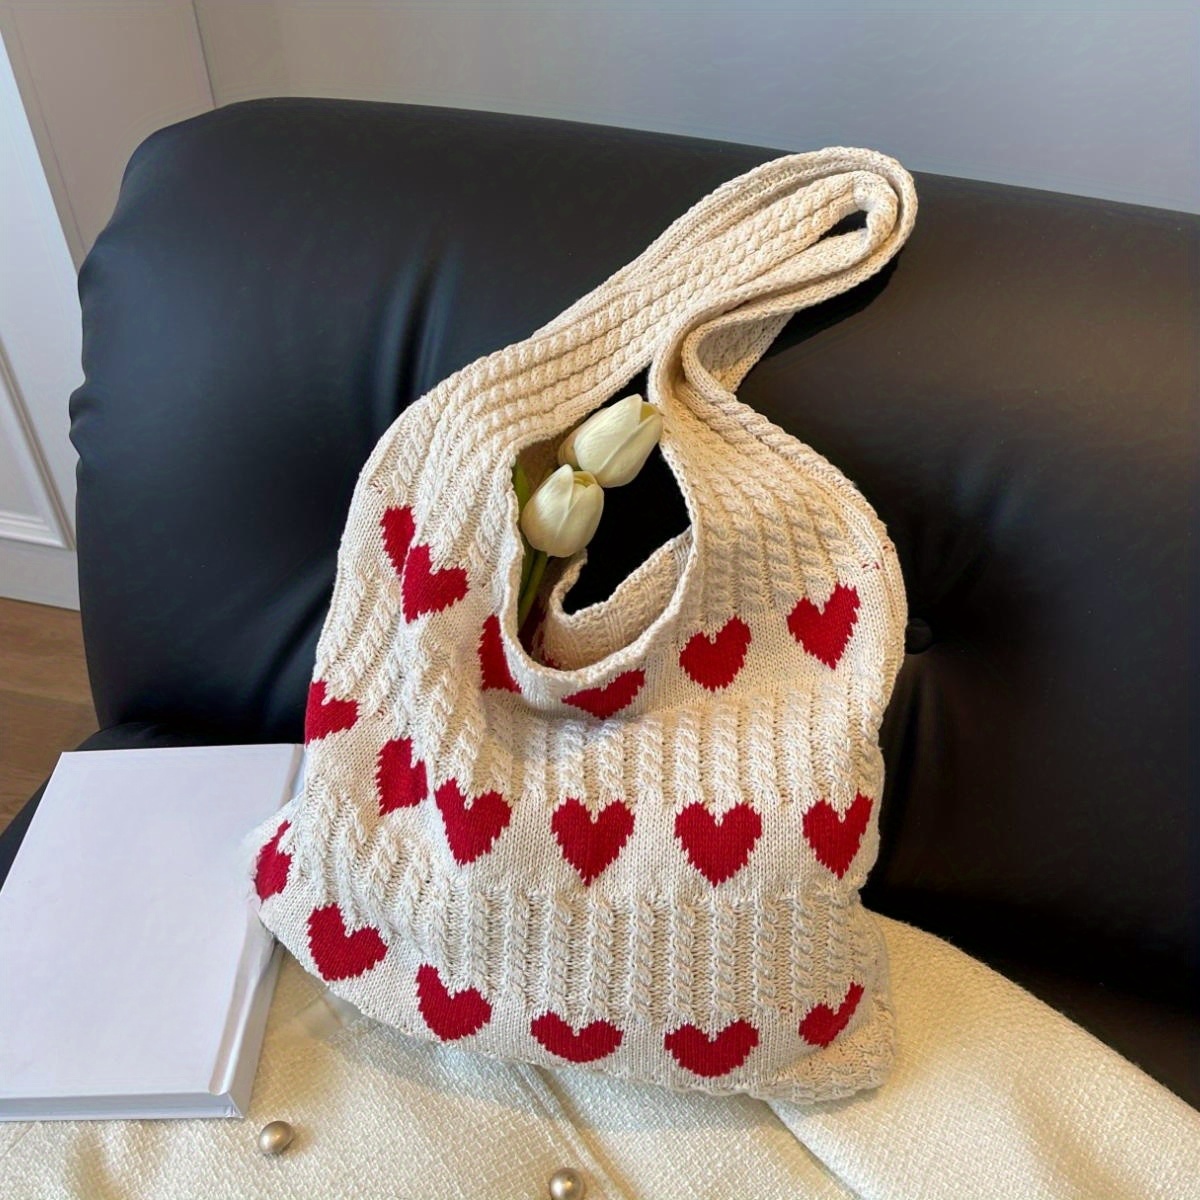 Large Capacity Knitted Hobo Bag, Cute Heart Pattern Tote Bag